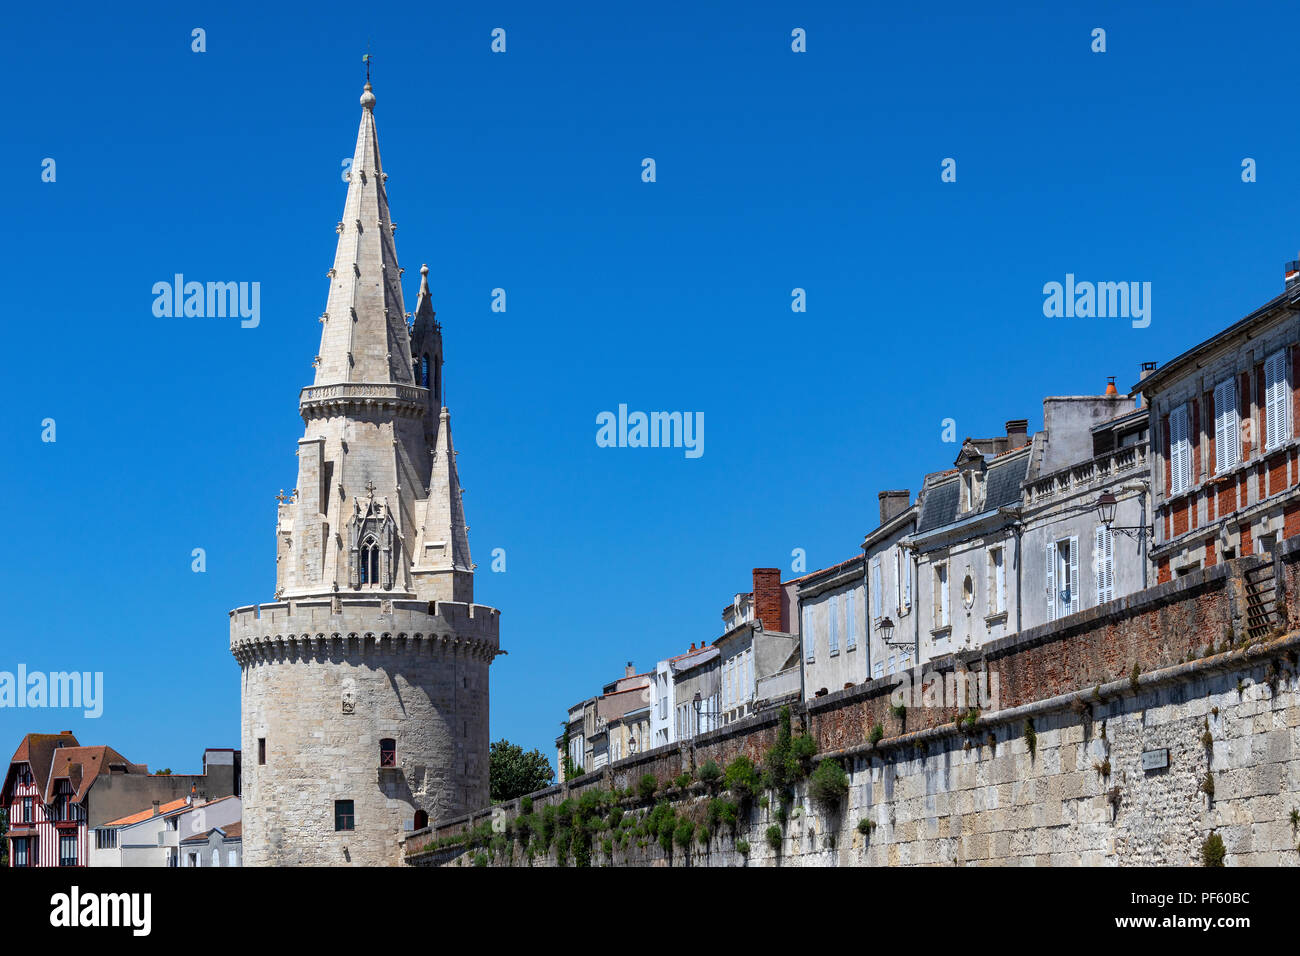 La Tour de la Lanterne or Tower of the Lantern in the Vieux Port in La Rochelle on the coast of the Poitou-Charentes region of France. Stock Photo